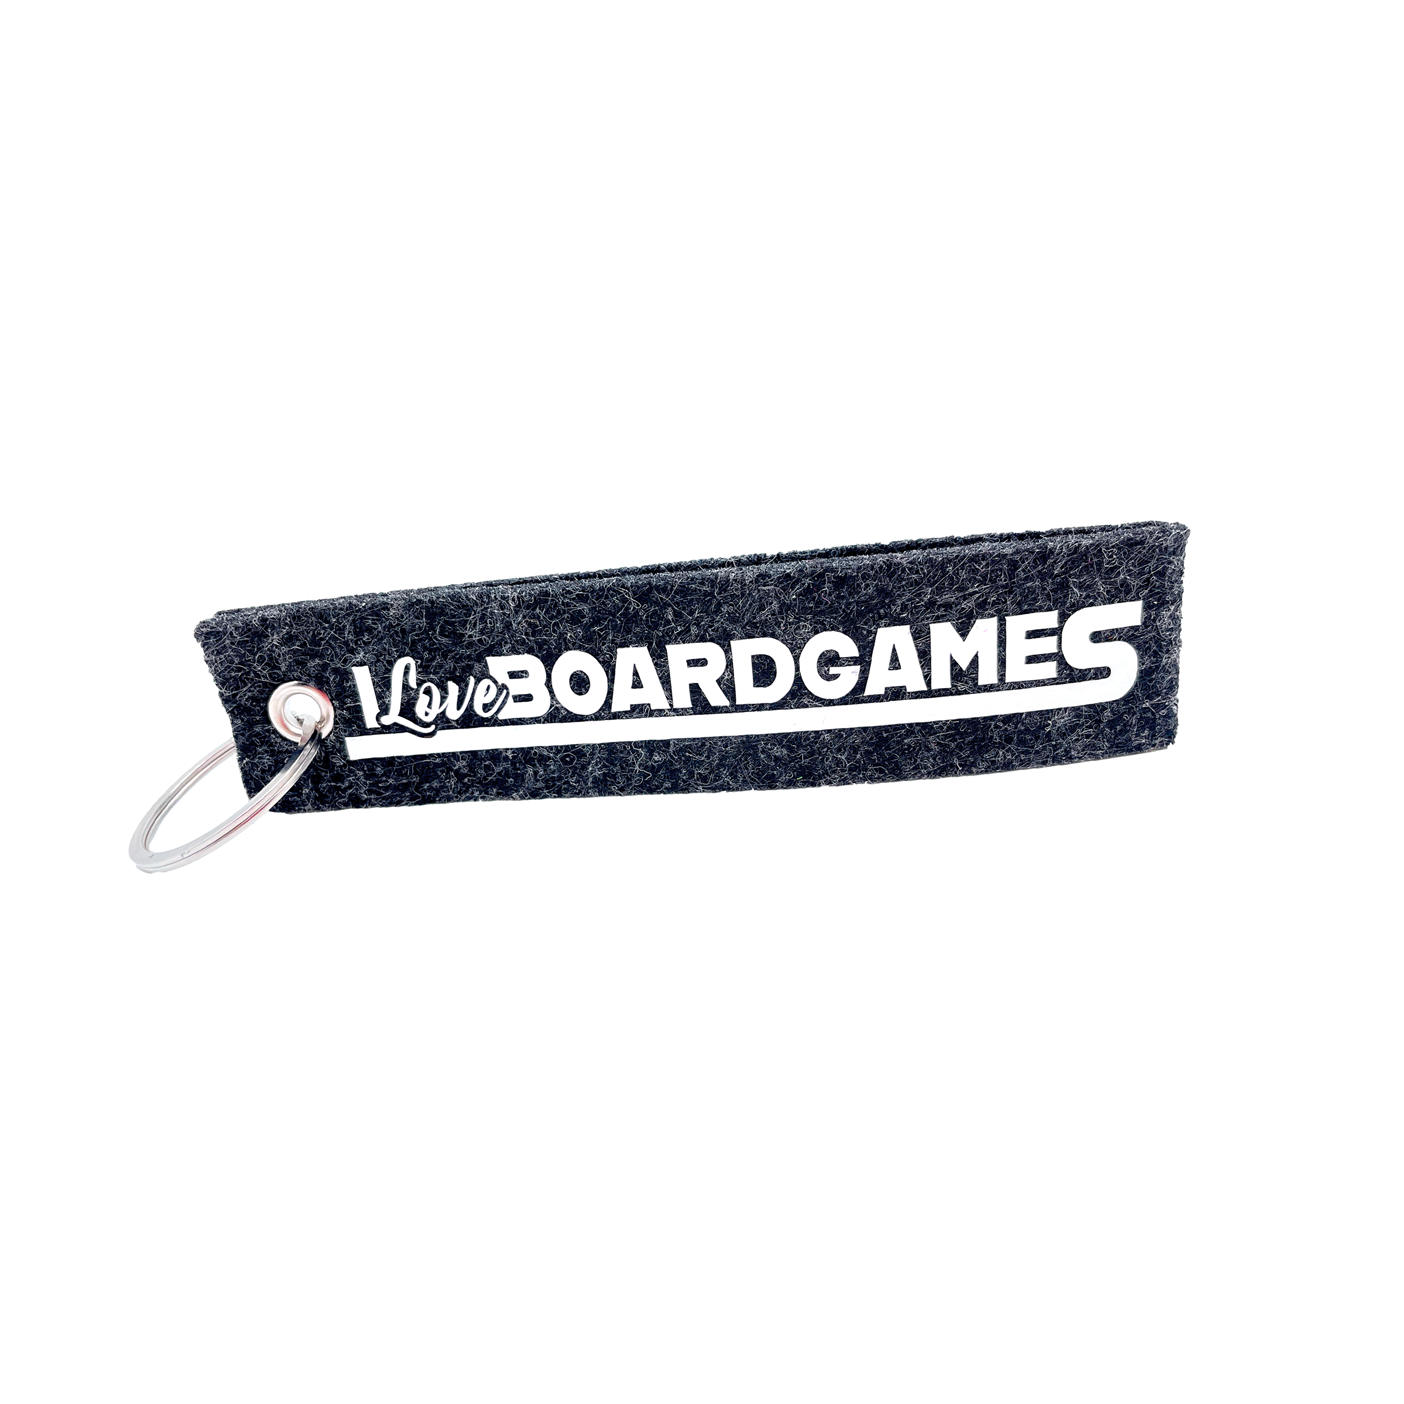 felt key chain with board game motifs, dark gray mixed